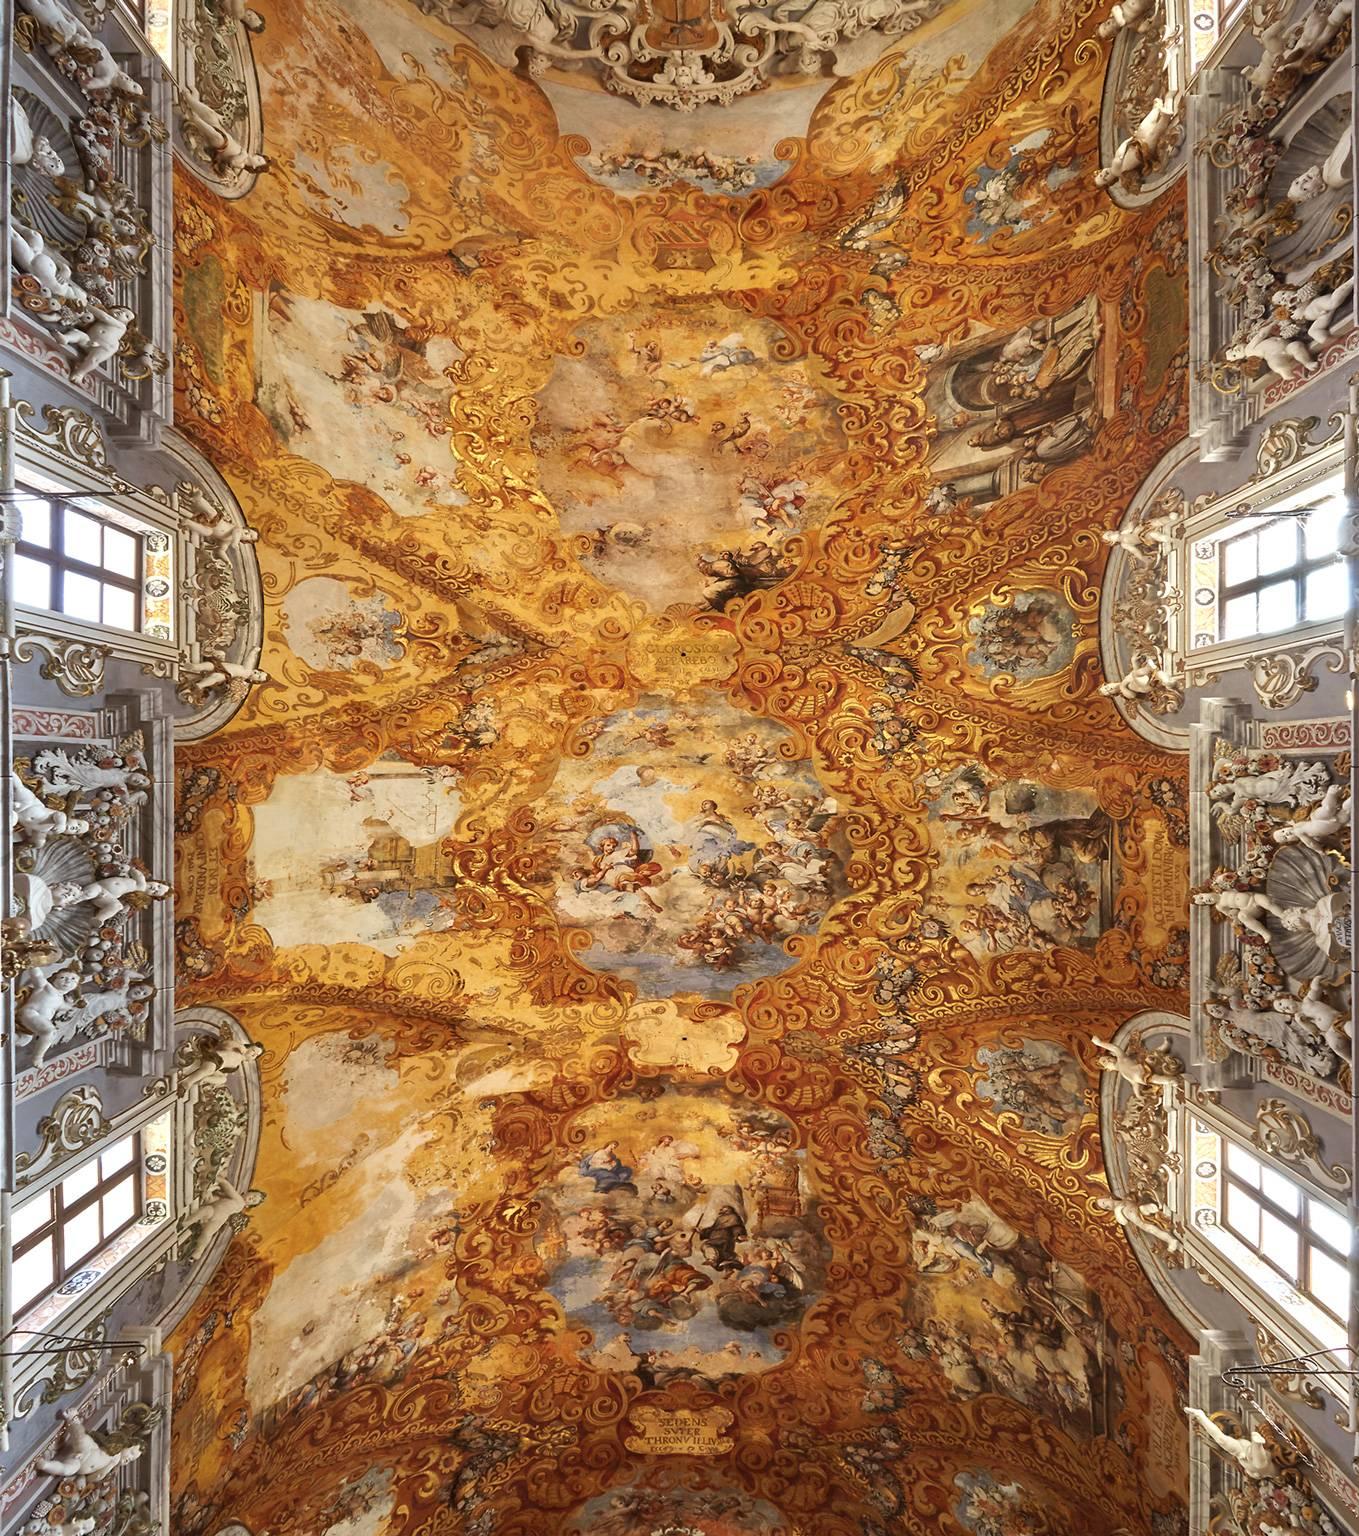 Hallelujah - photographie grand format du plafond de palazzo fresco baroque italien